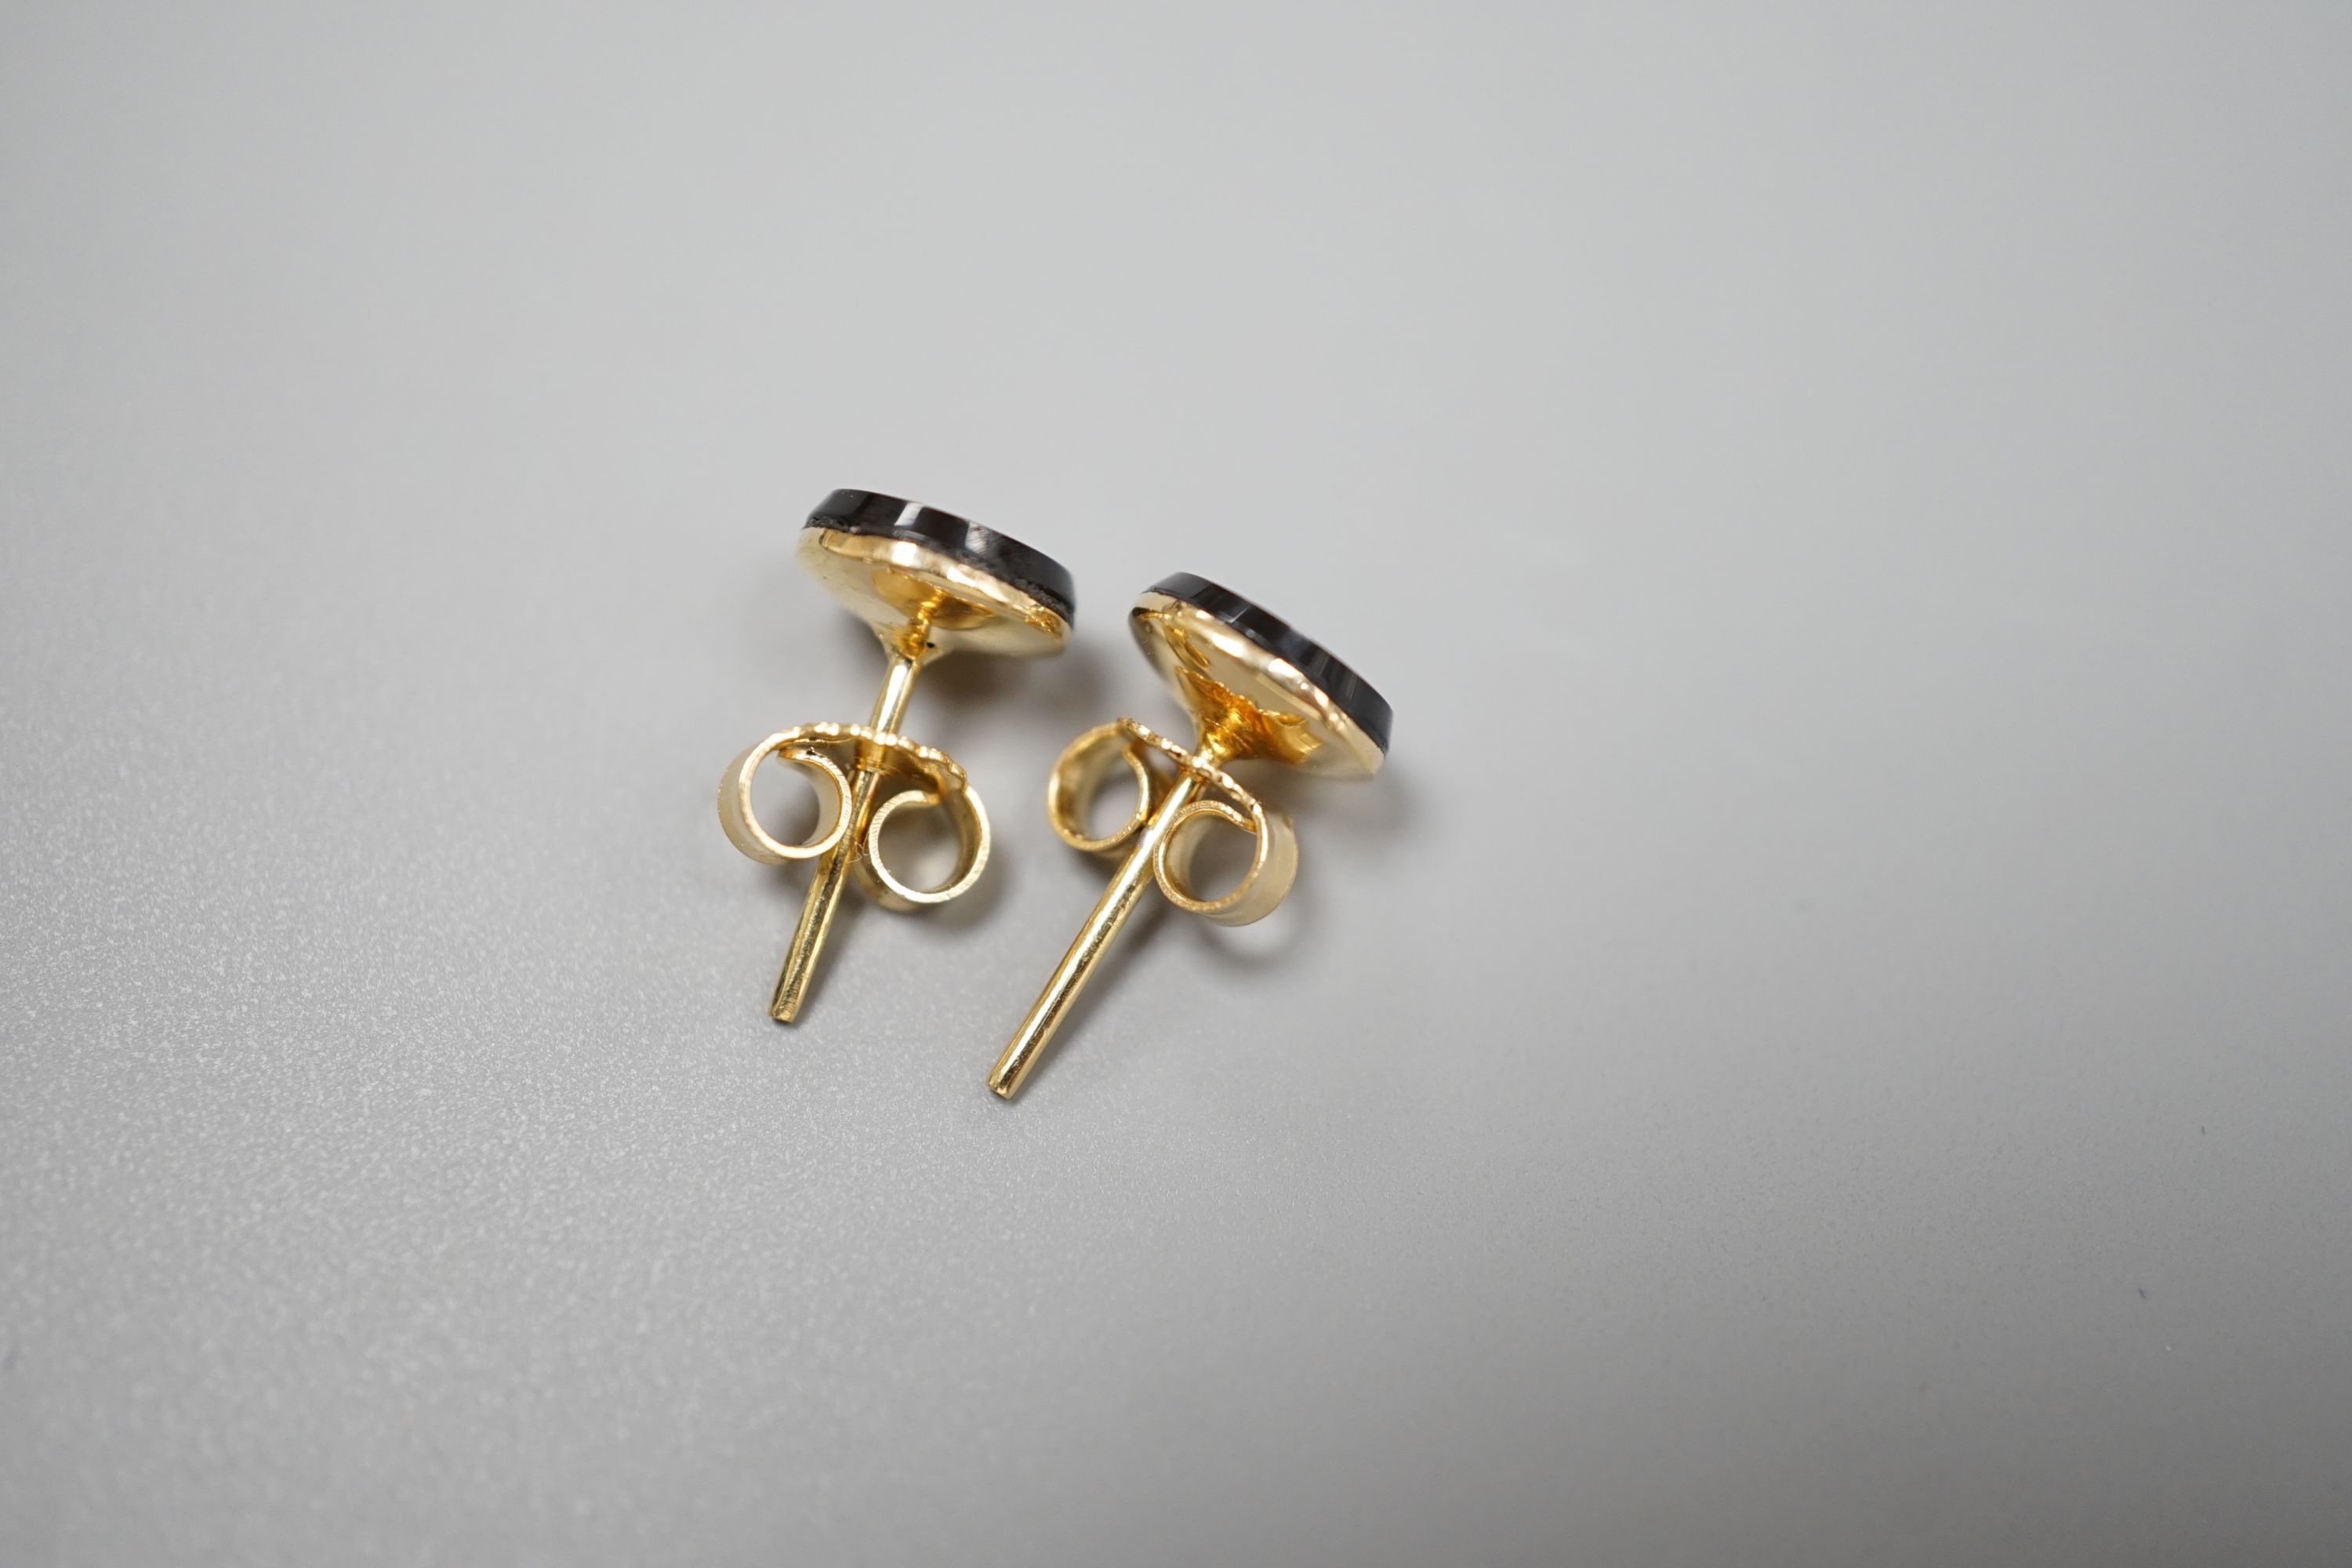 A pair of 750 yellow metal, black onyx and diamond set circular ear studs, 6mm, gross weight 1.8 grams.